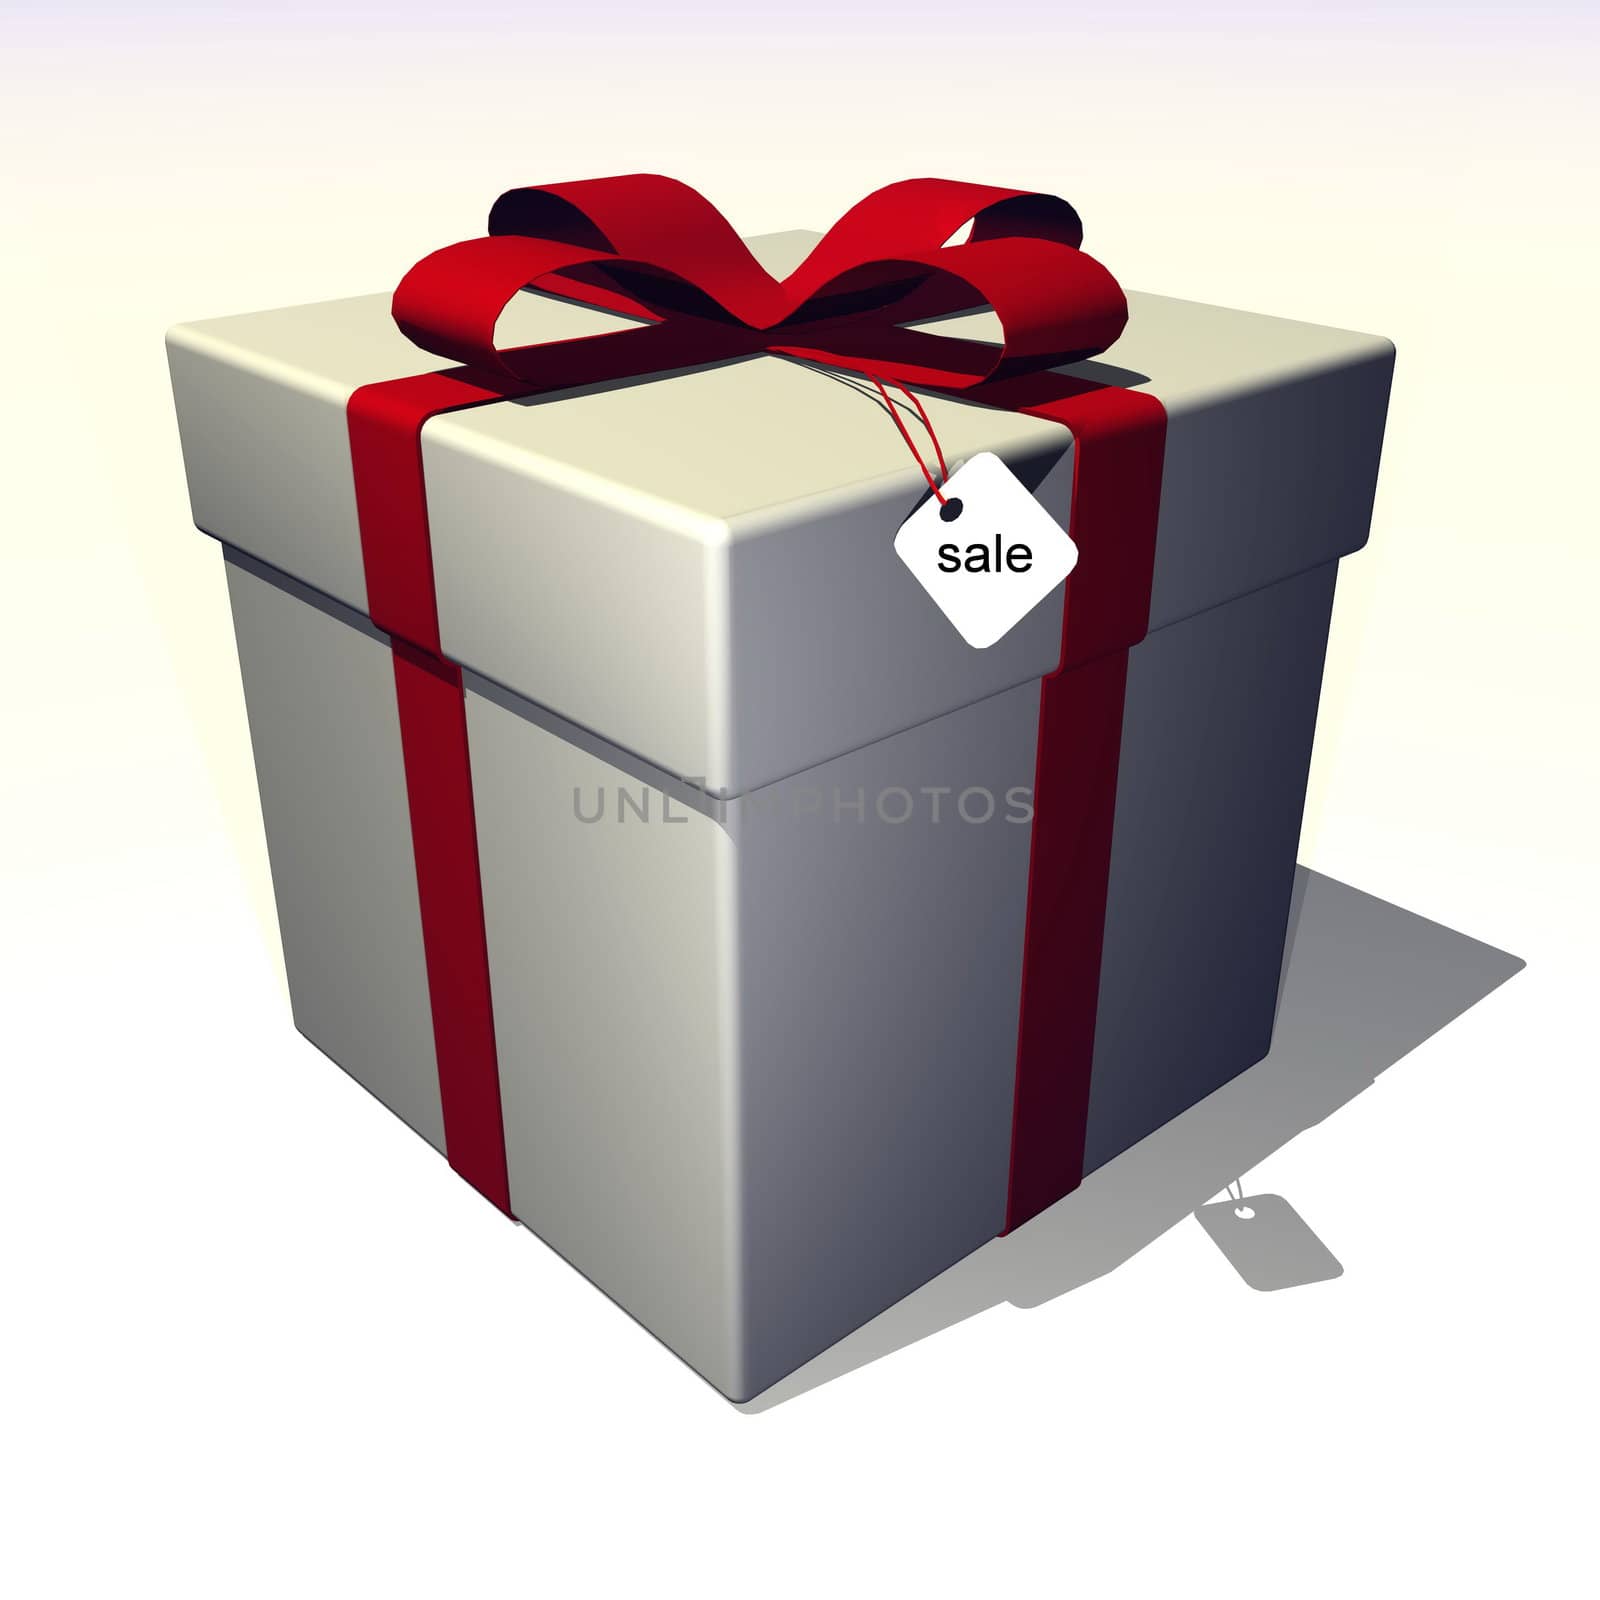 Sale gift box by Elenaphotos21